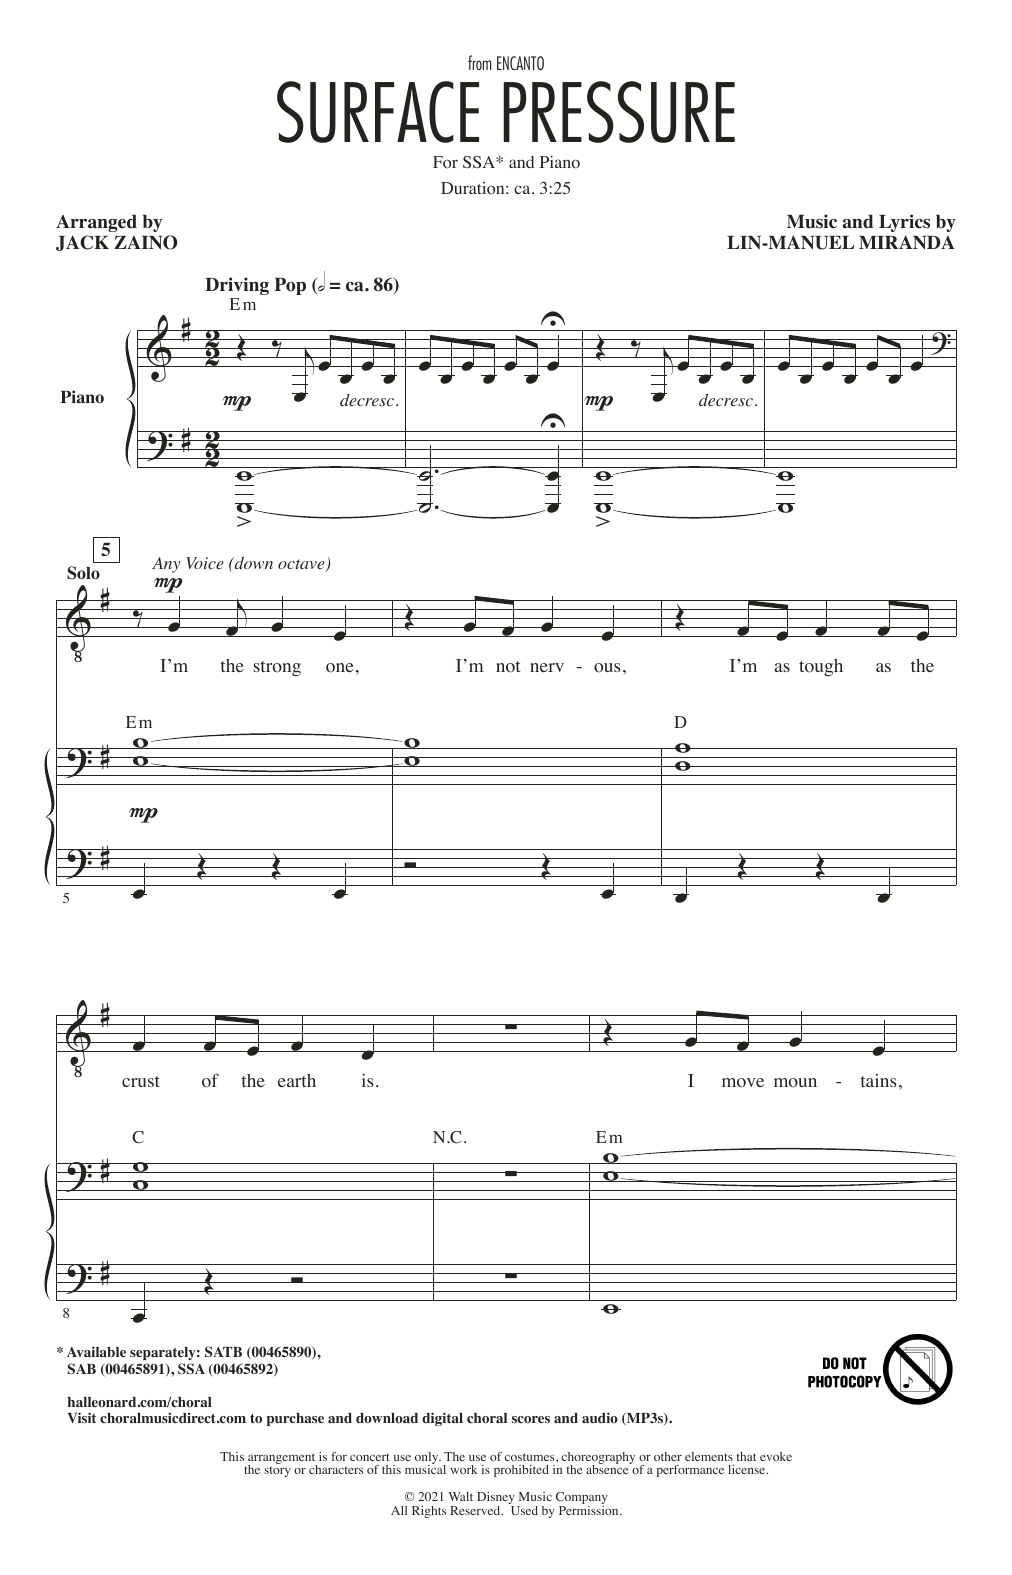 Lin-Manuel Miranda Surface Pressure (from Encanto) (arr. Jack Zaino) Sheet Music Notes & Chords for SSA Choir - Download or Print PDF